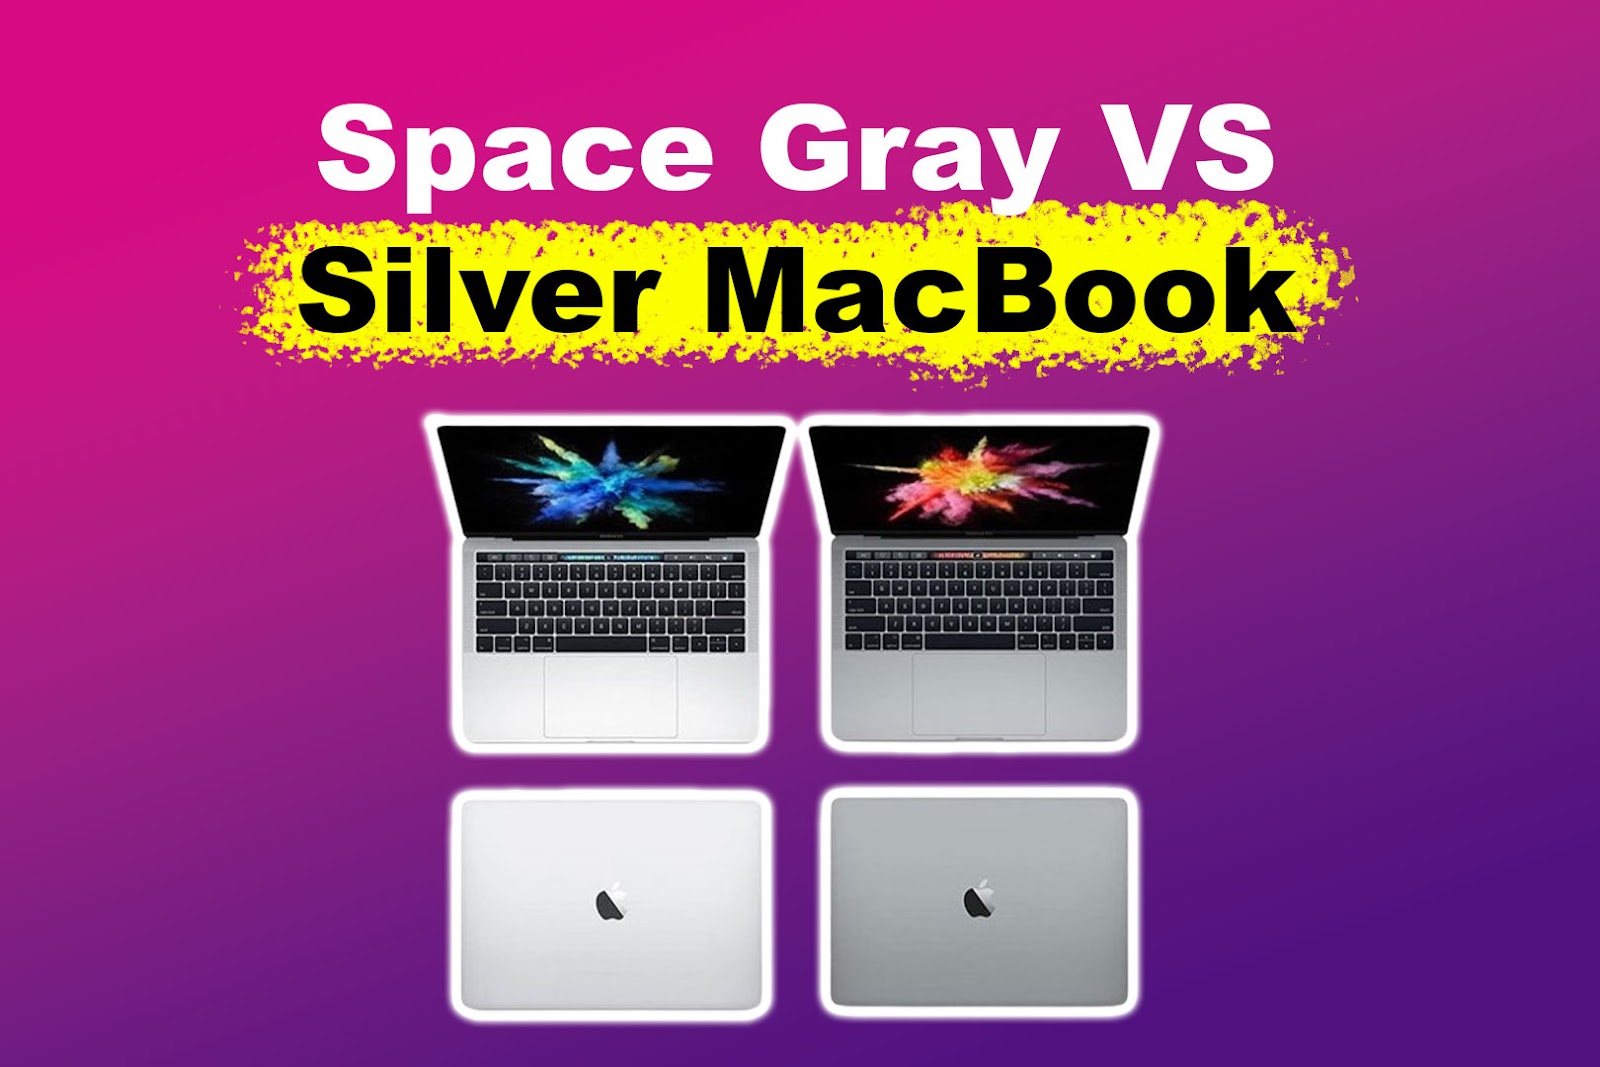 Space gray vs Silver MacBook